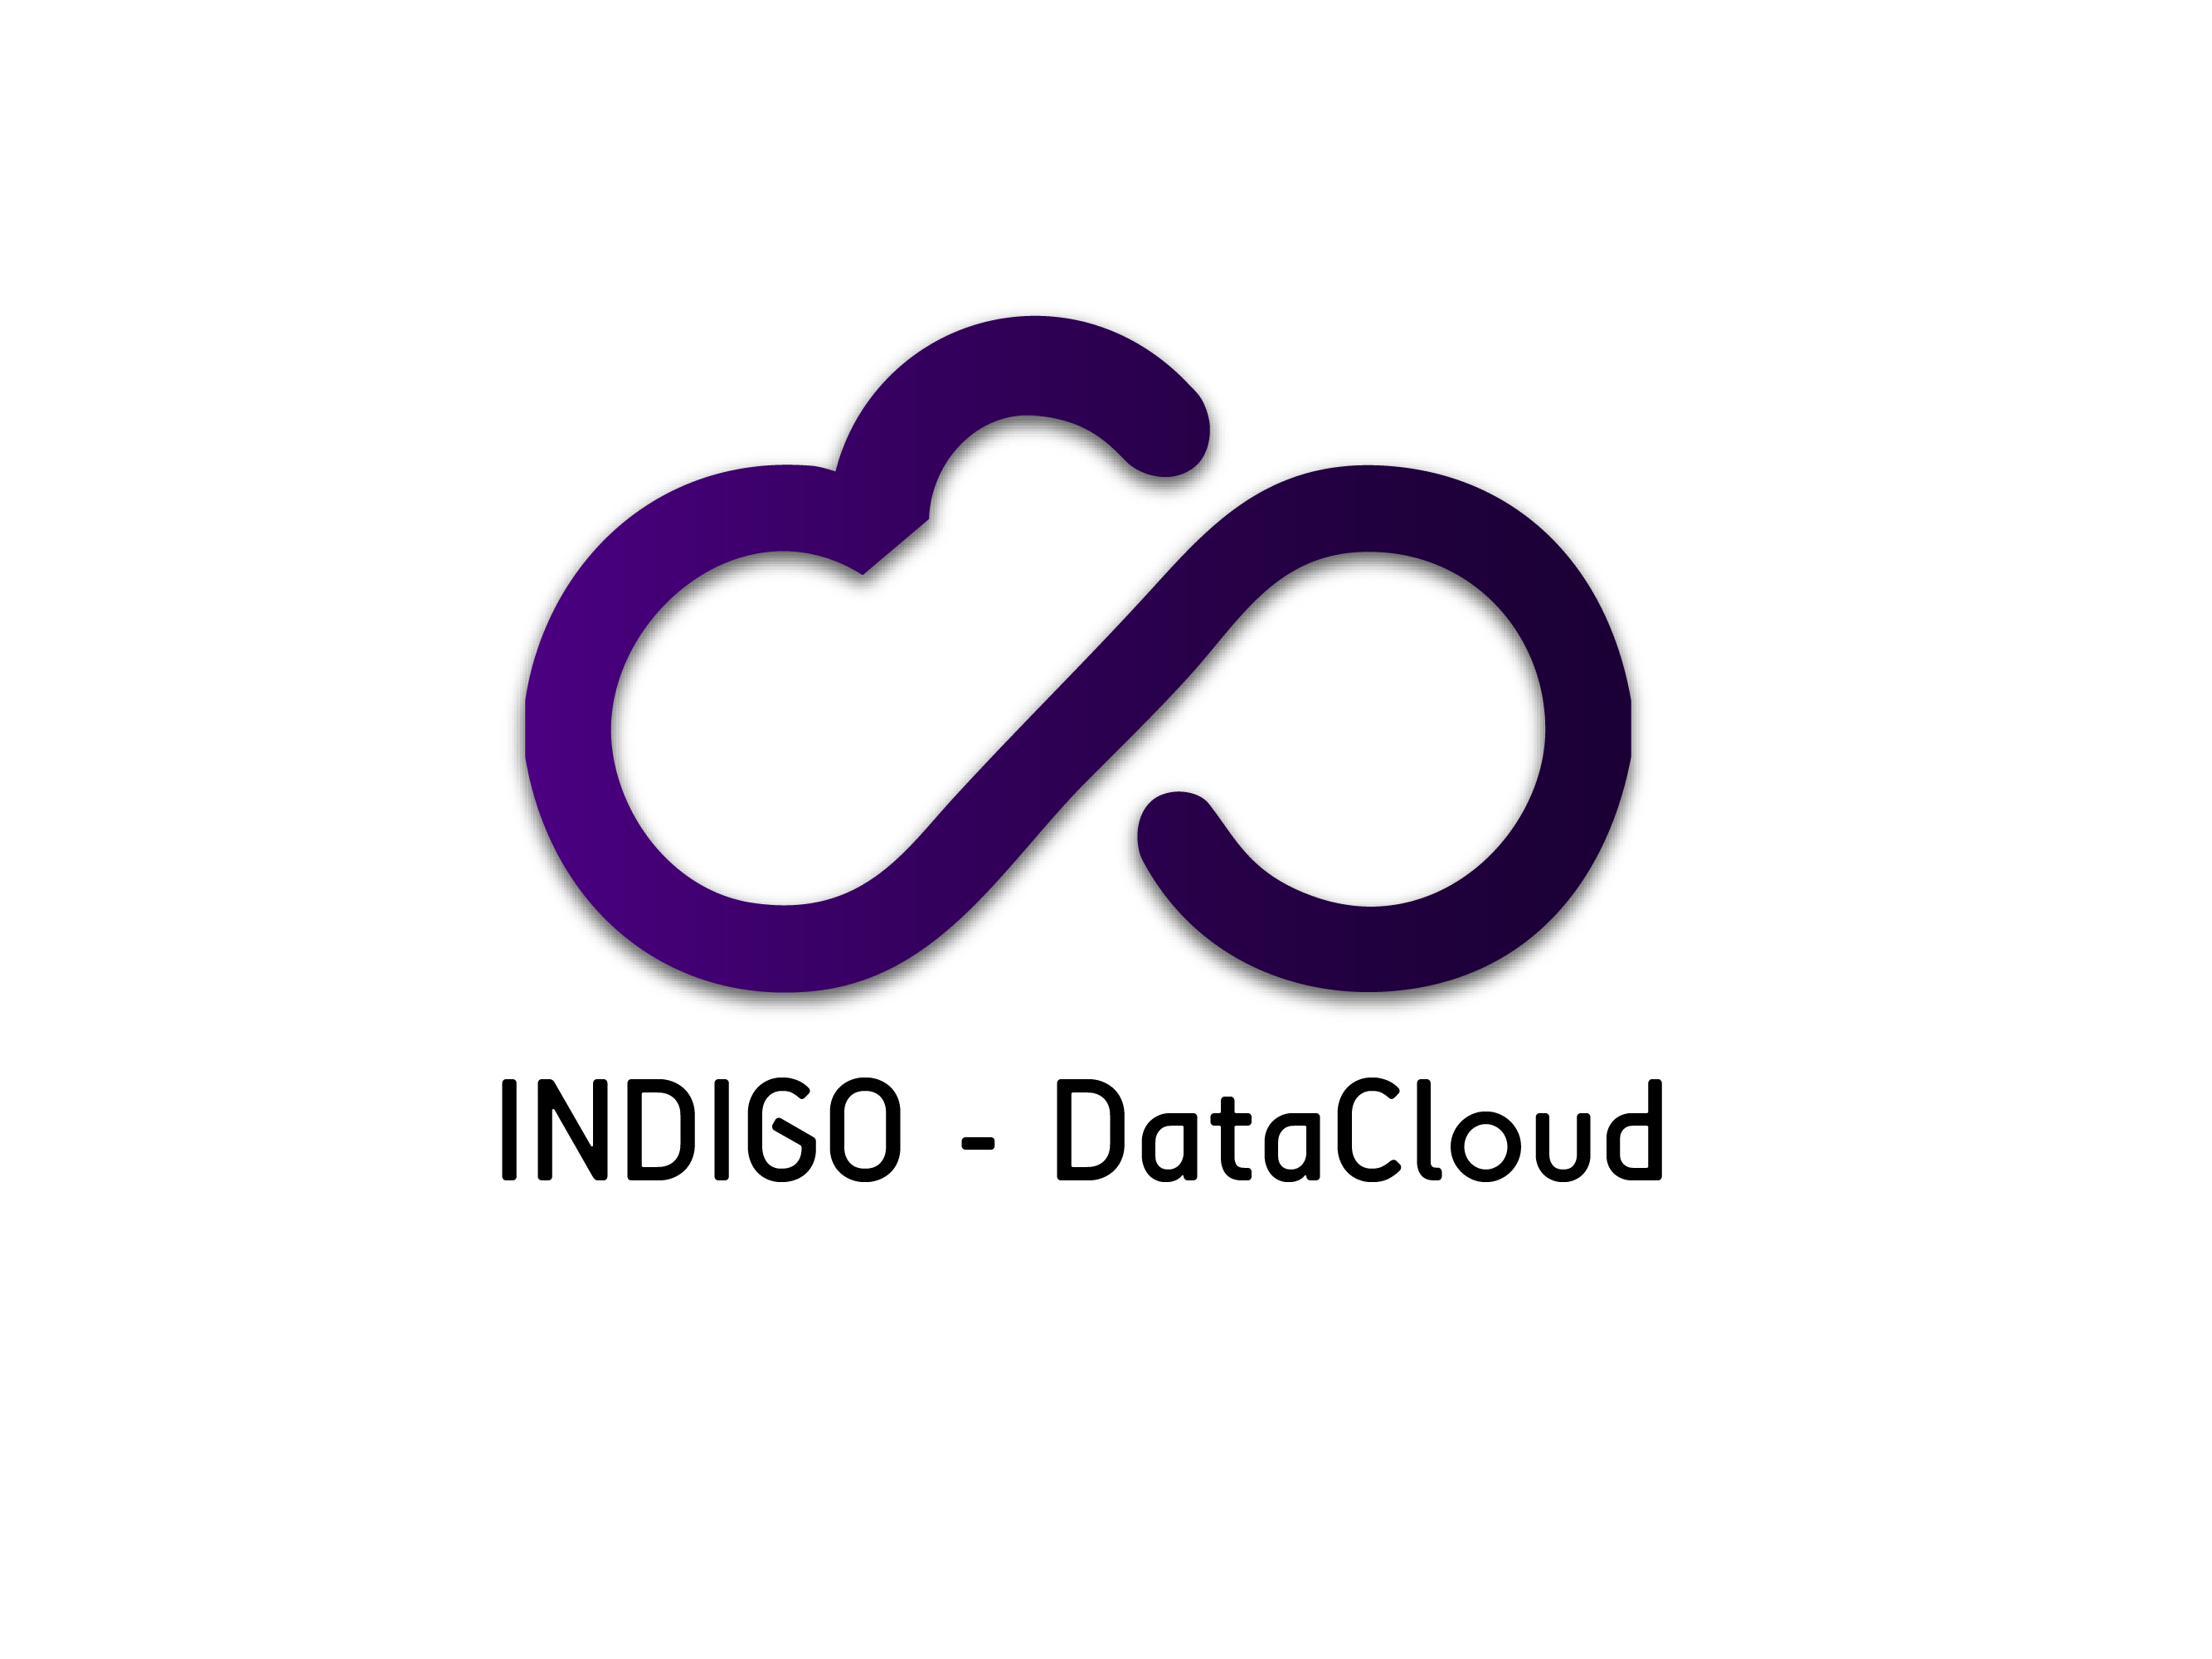 INtegrating Distributed data Infrastructures for Global ExplOitation - INDIGO-DataCloud